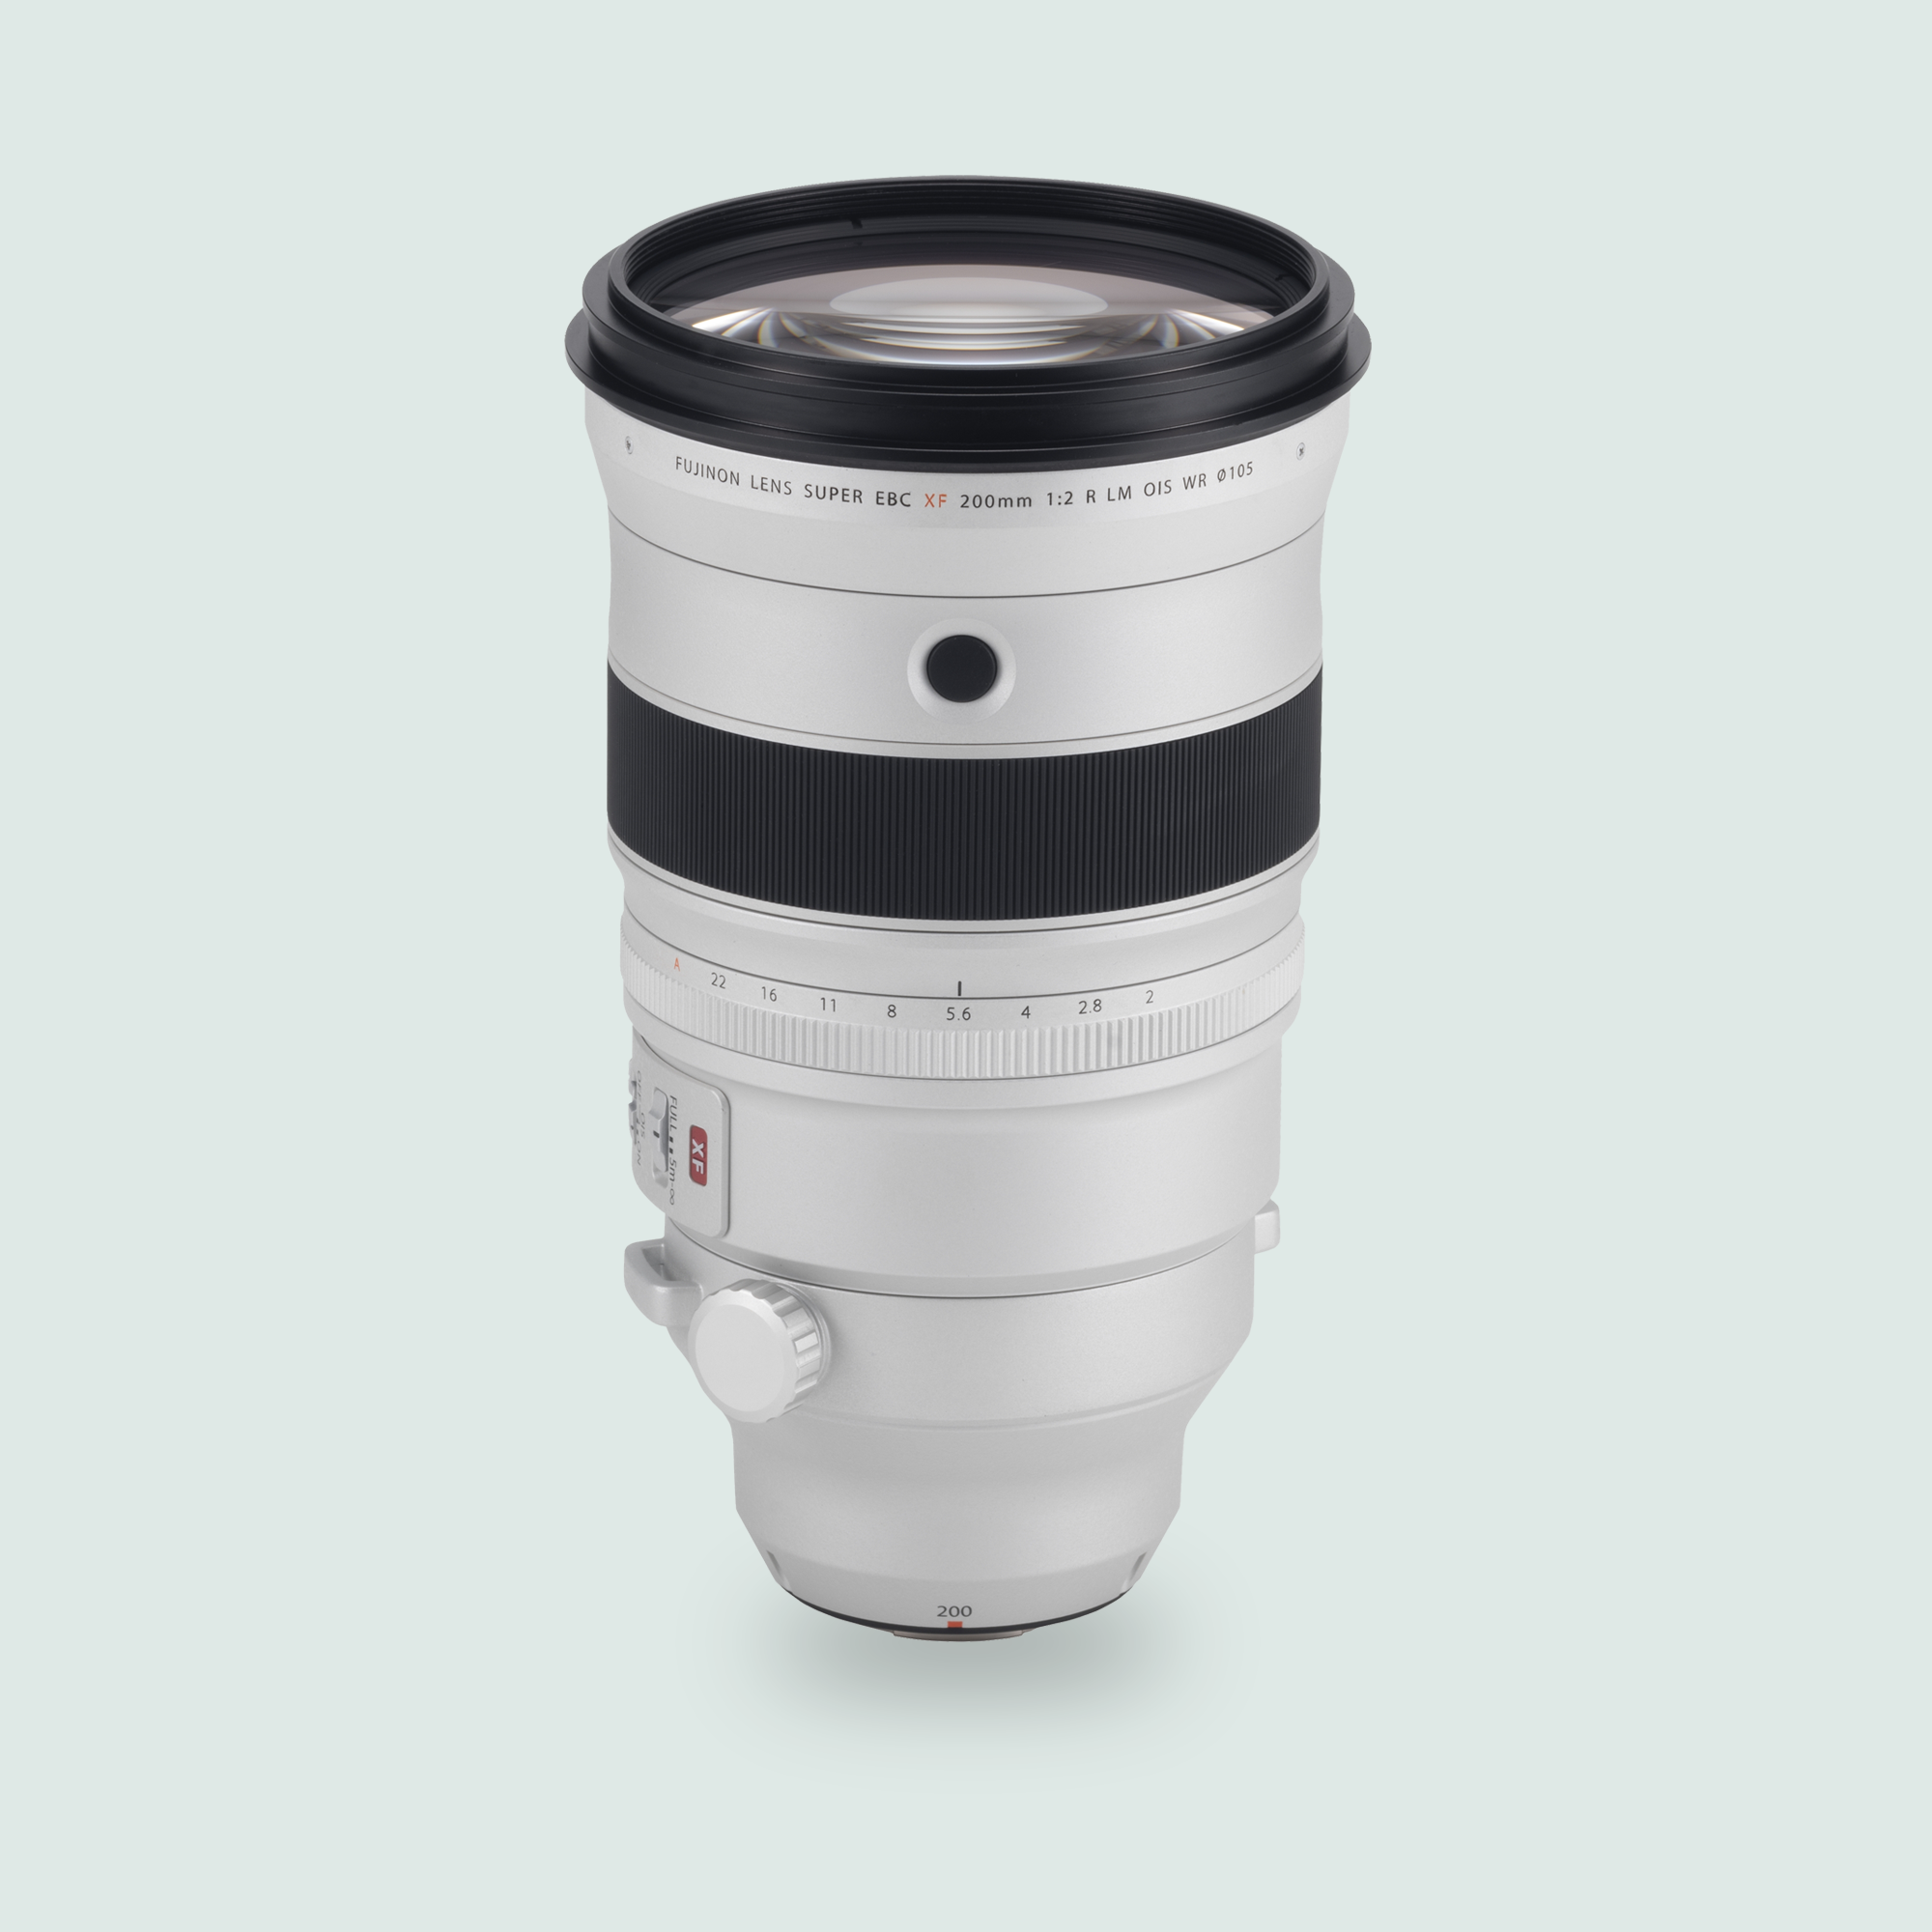 XF 50-140mm F2.8 R LM OIS WR Lens | Fujifilm AU House of Photography